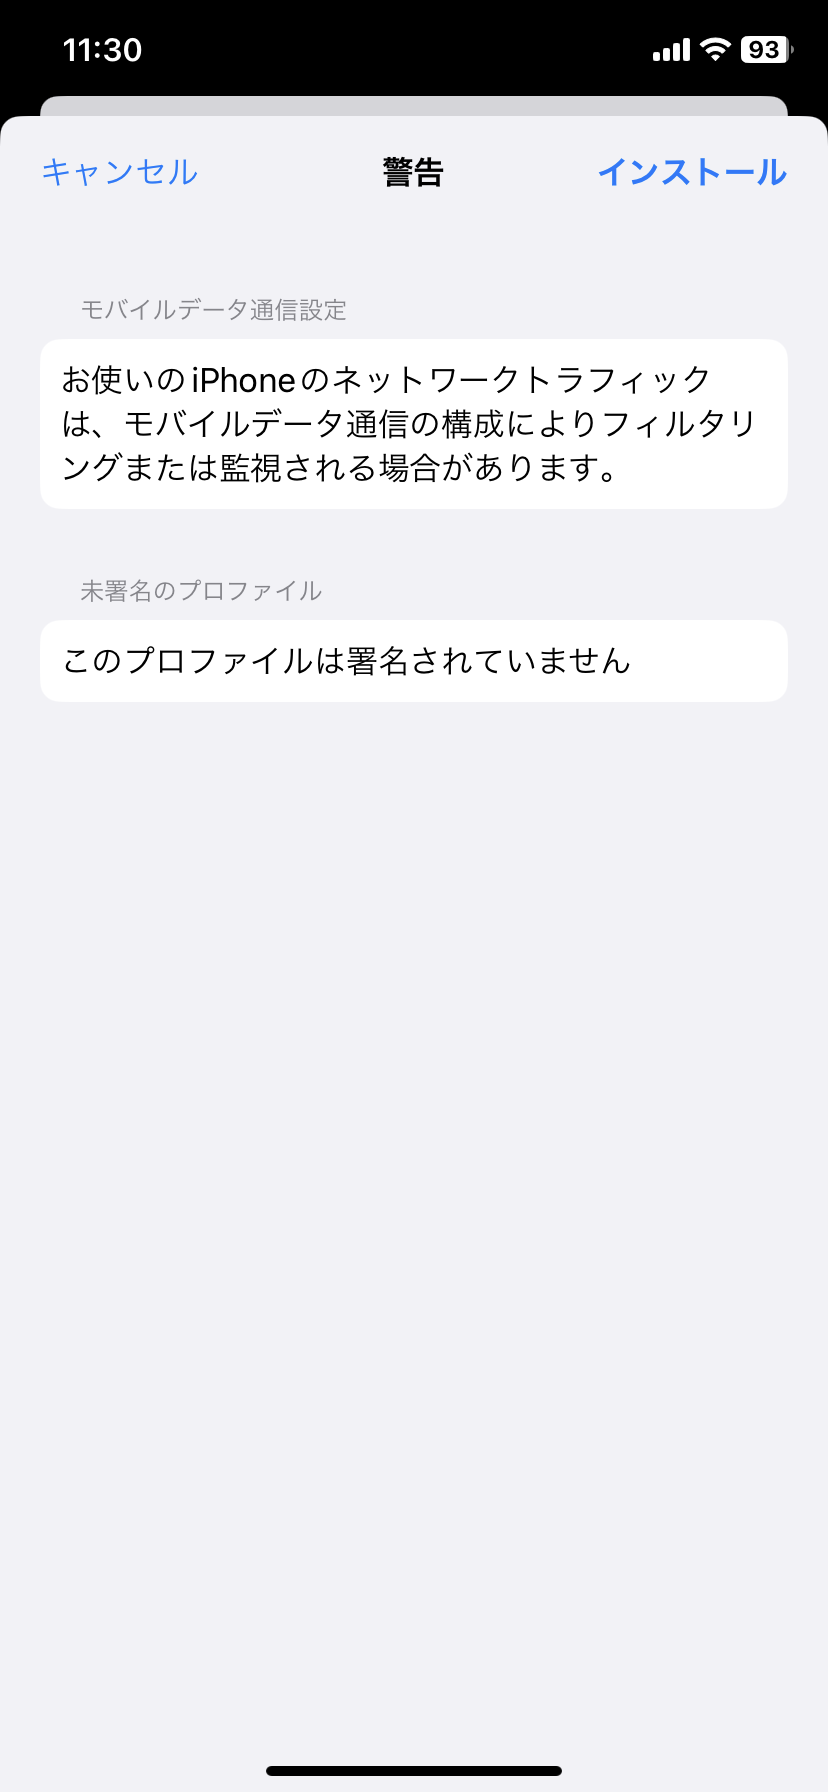 mineoのAPN設定(iPhone)